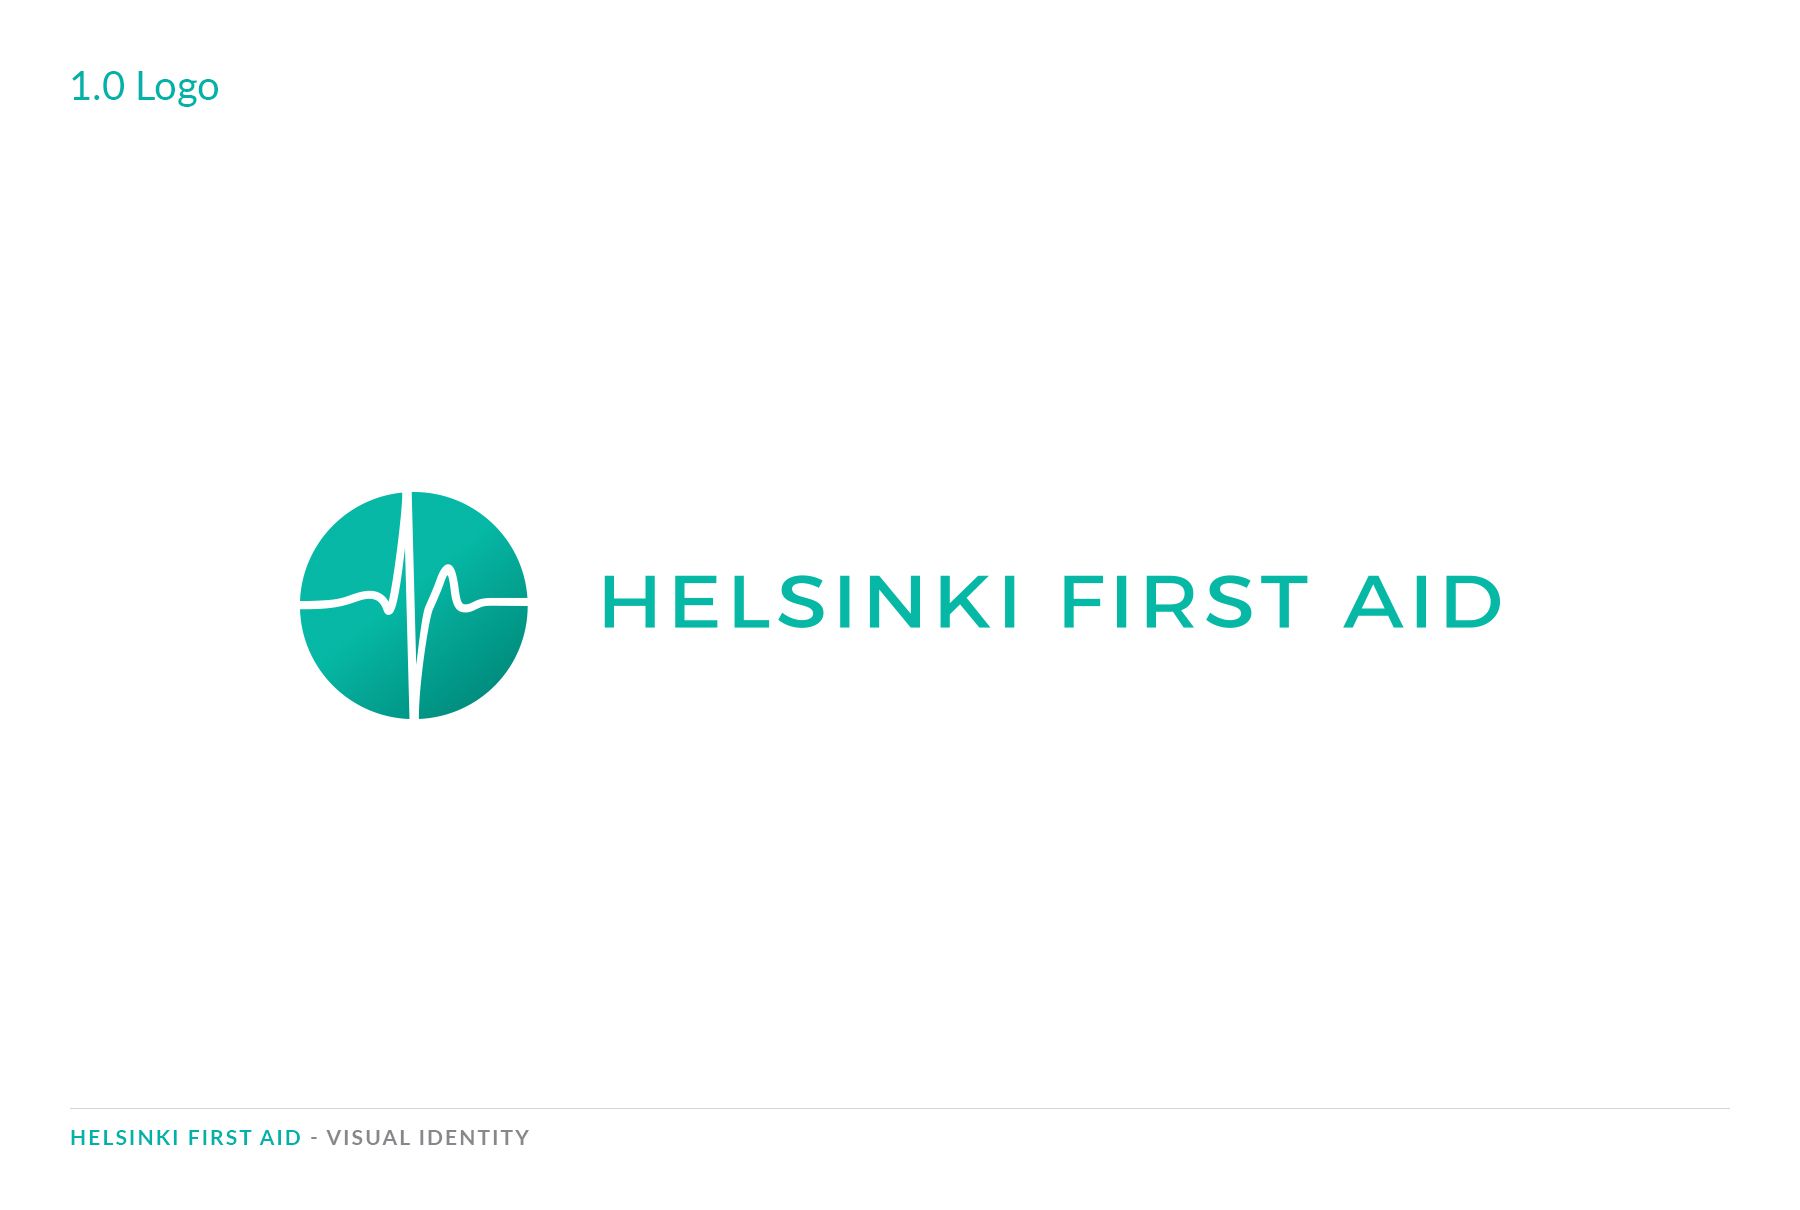 Helsinki First Aid